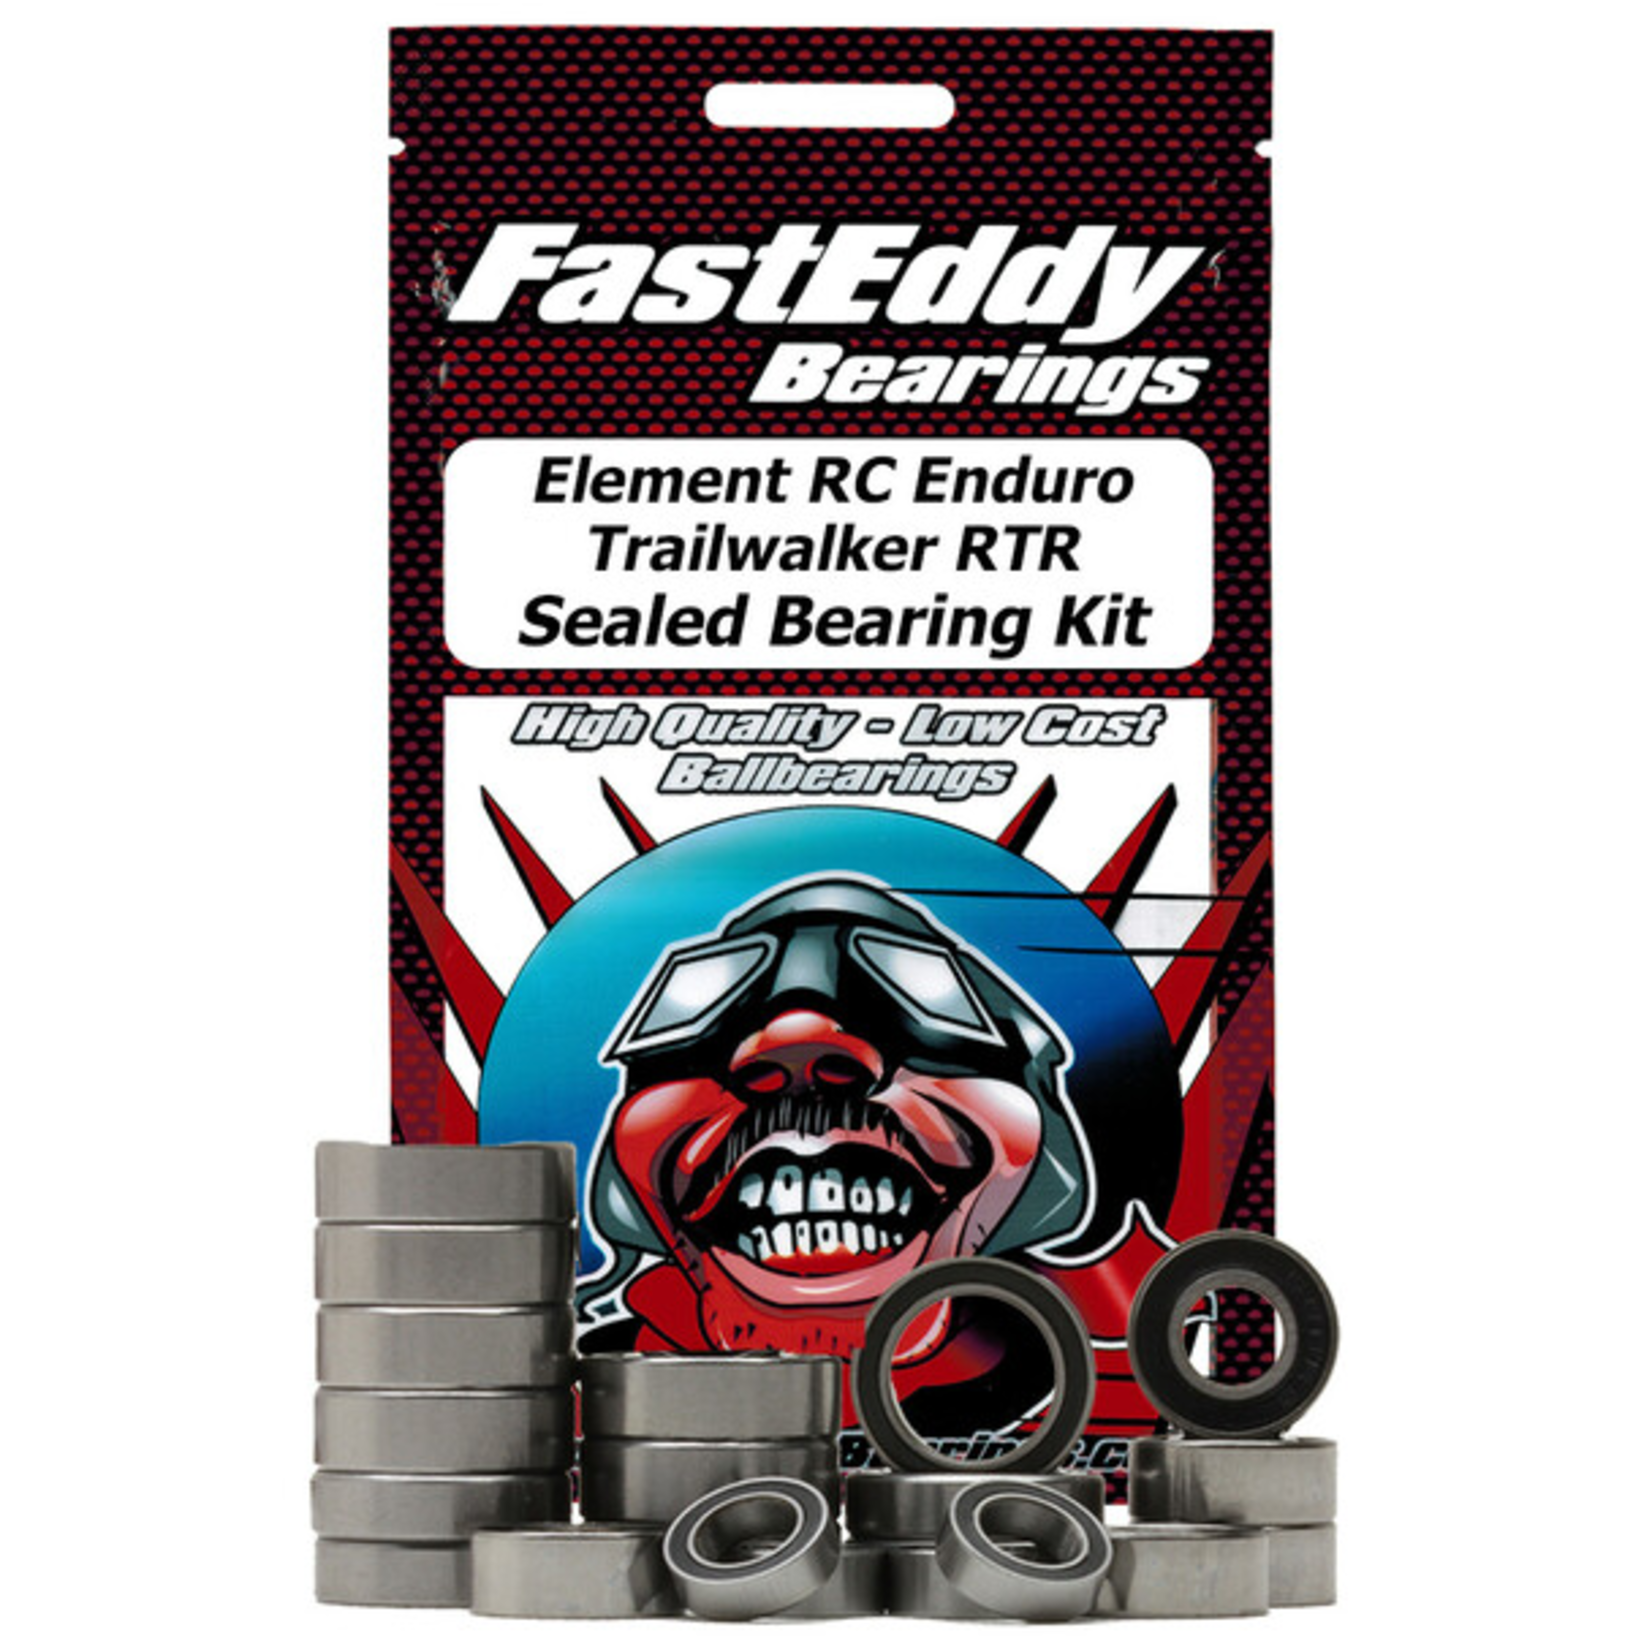 FastEddy FastEddy Element RC Enduro Trailwalker Sealed Bearing Kit #TFE6490